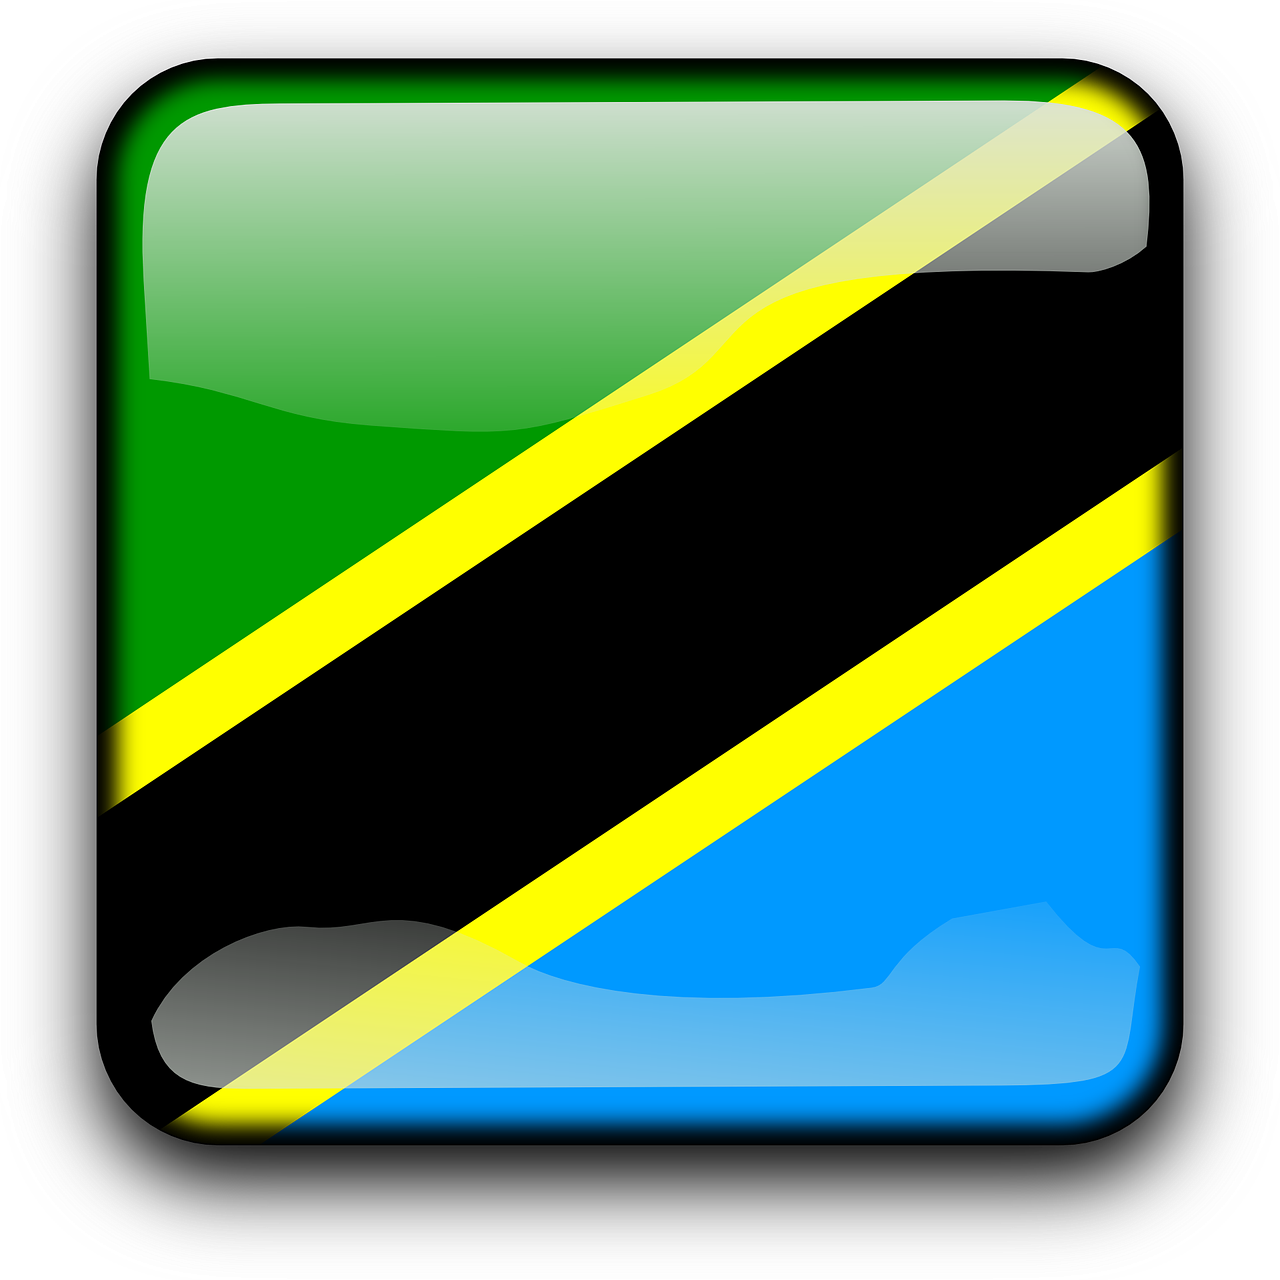 Tanzania Flag Button Design PNG image